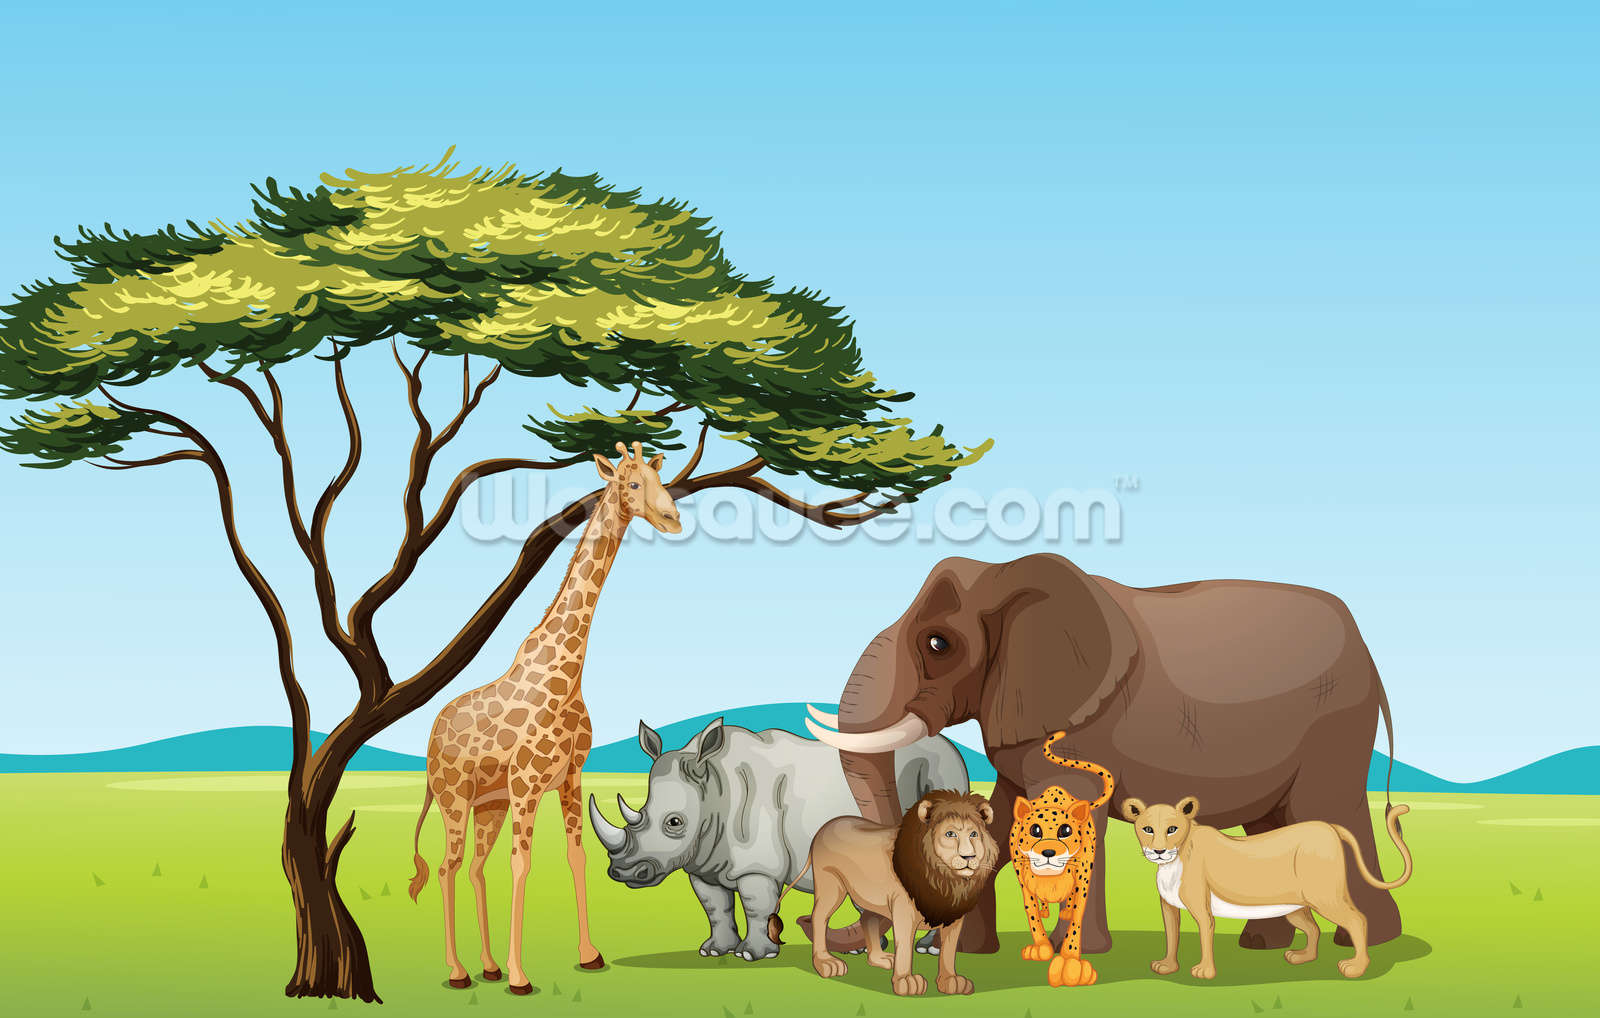 African Safari Cartoon Wallpaper Mural | Wallsauce US